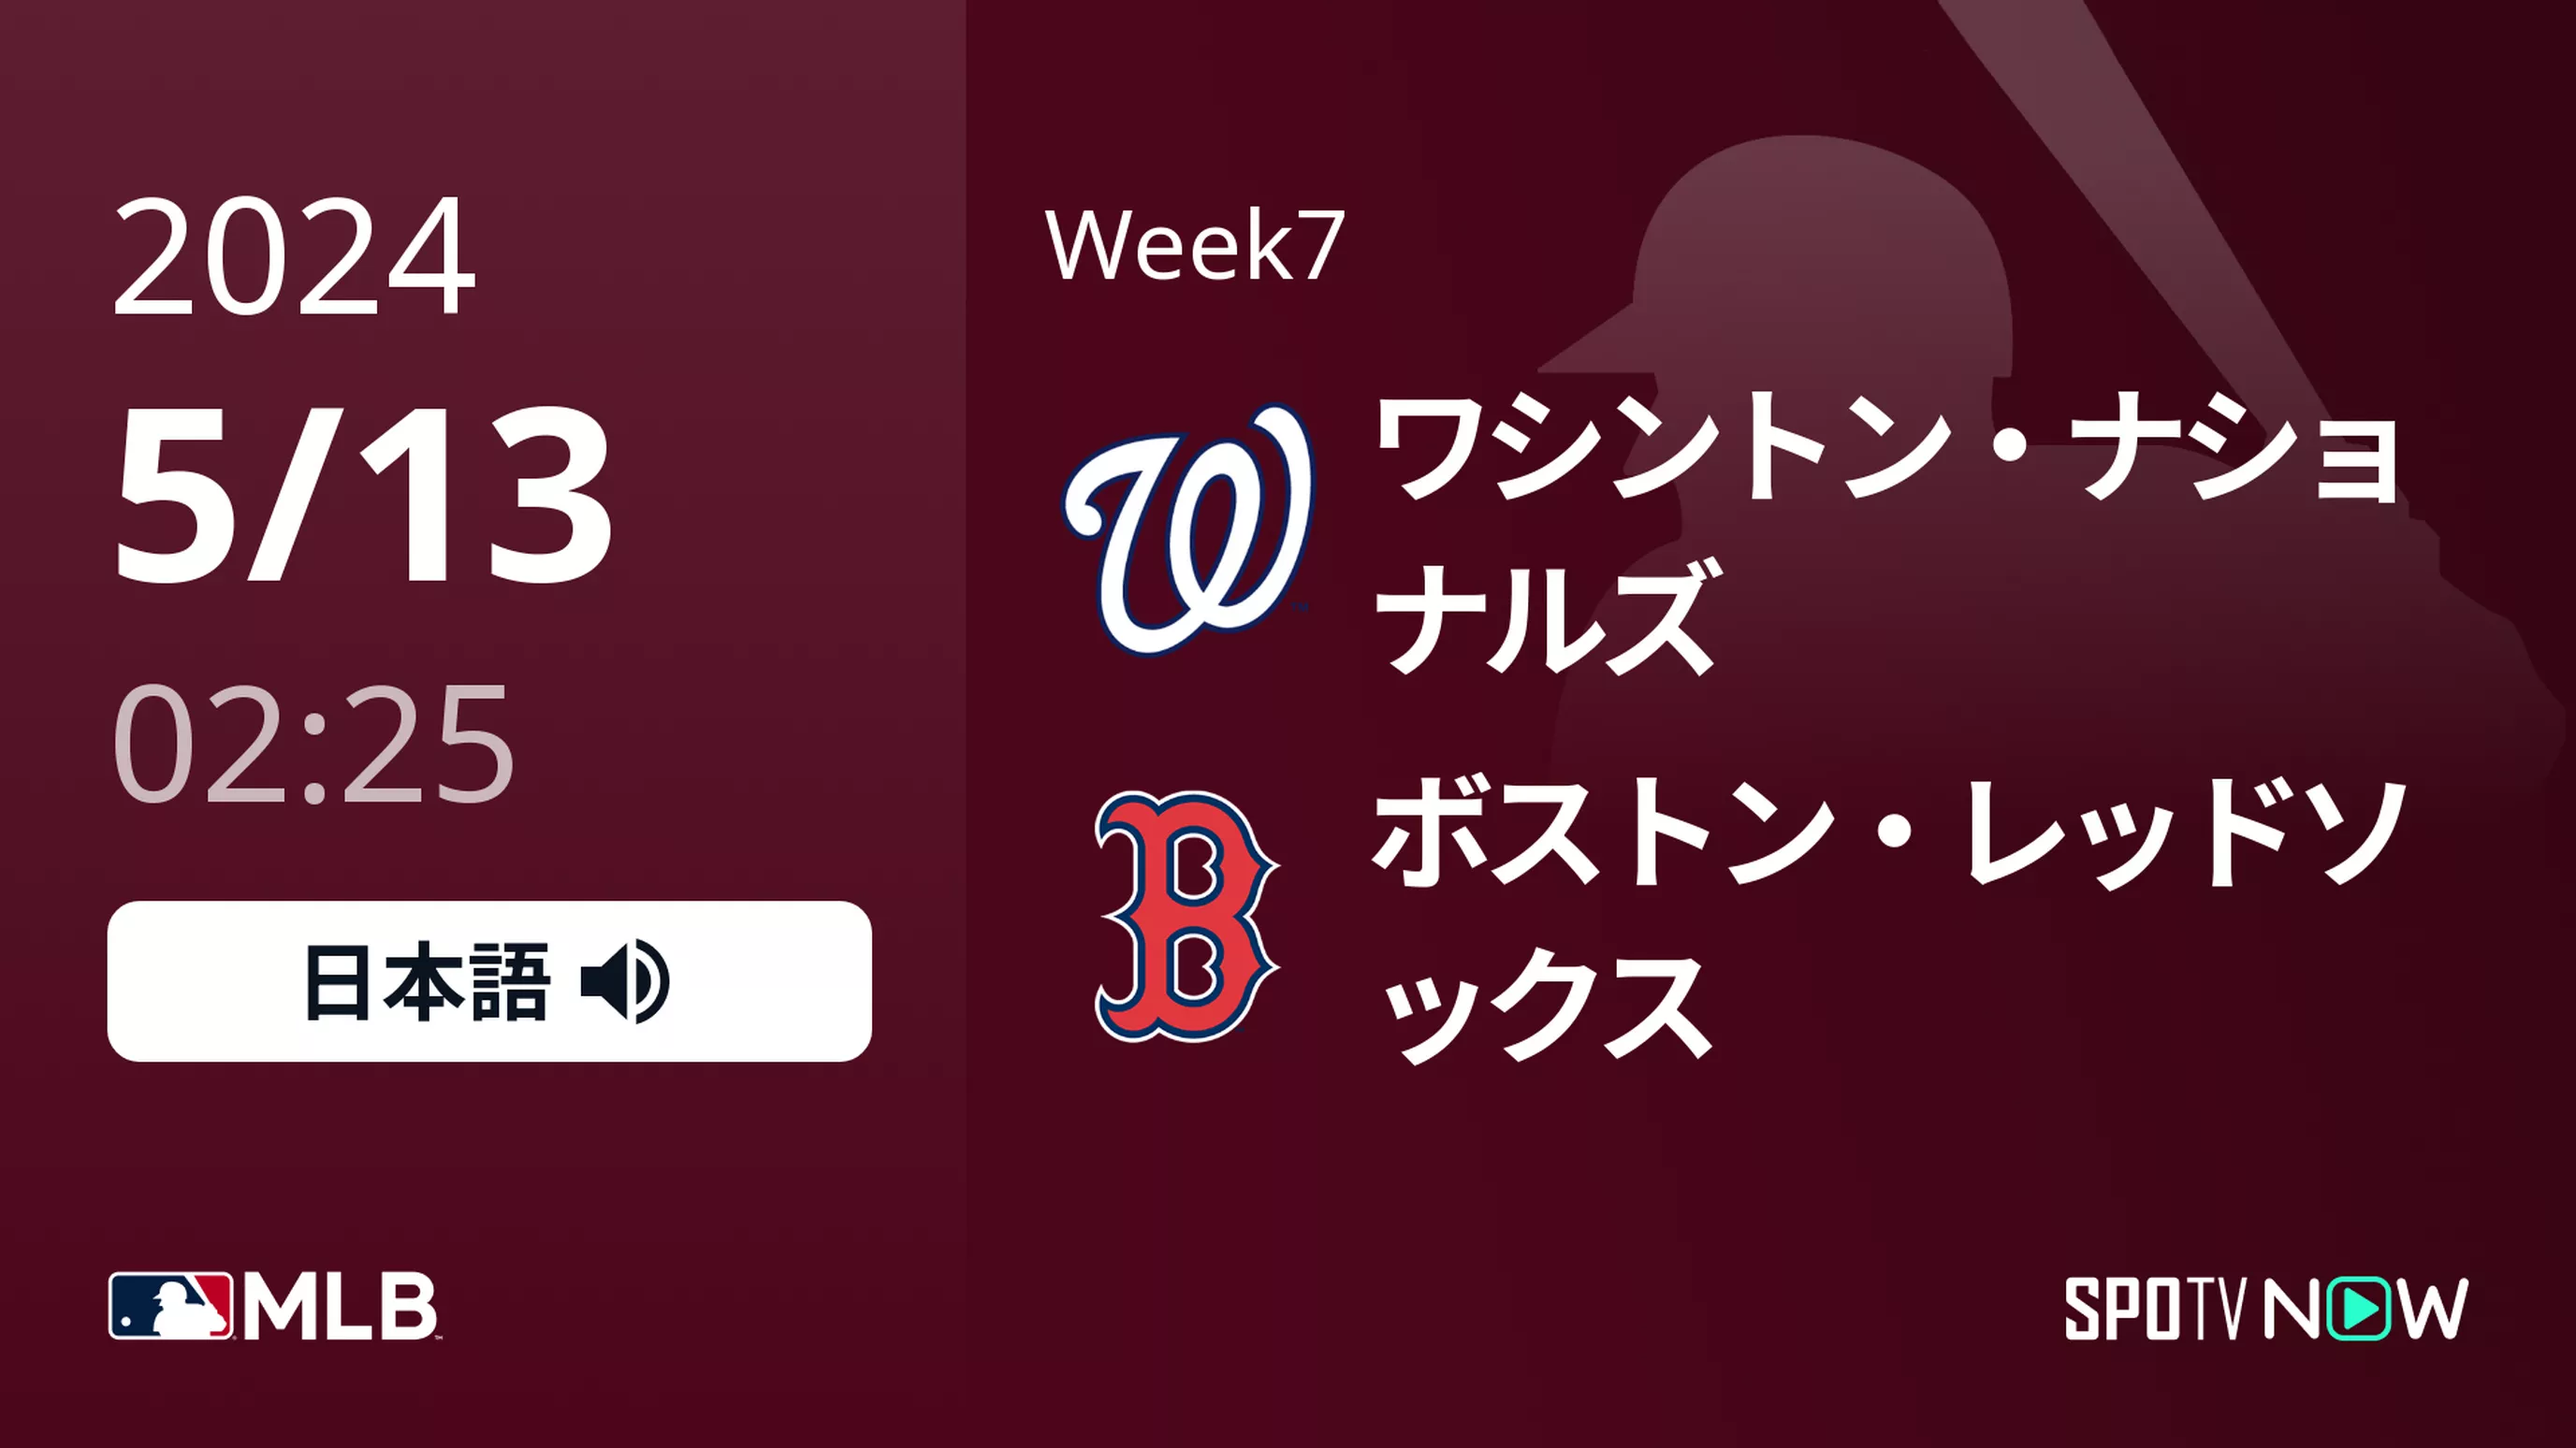 Week7 ナショナルズ vs Rソックス 5/13[MLB]